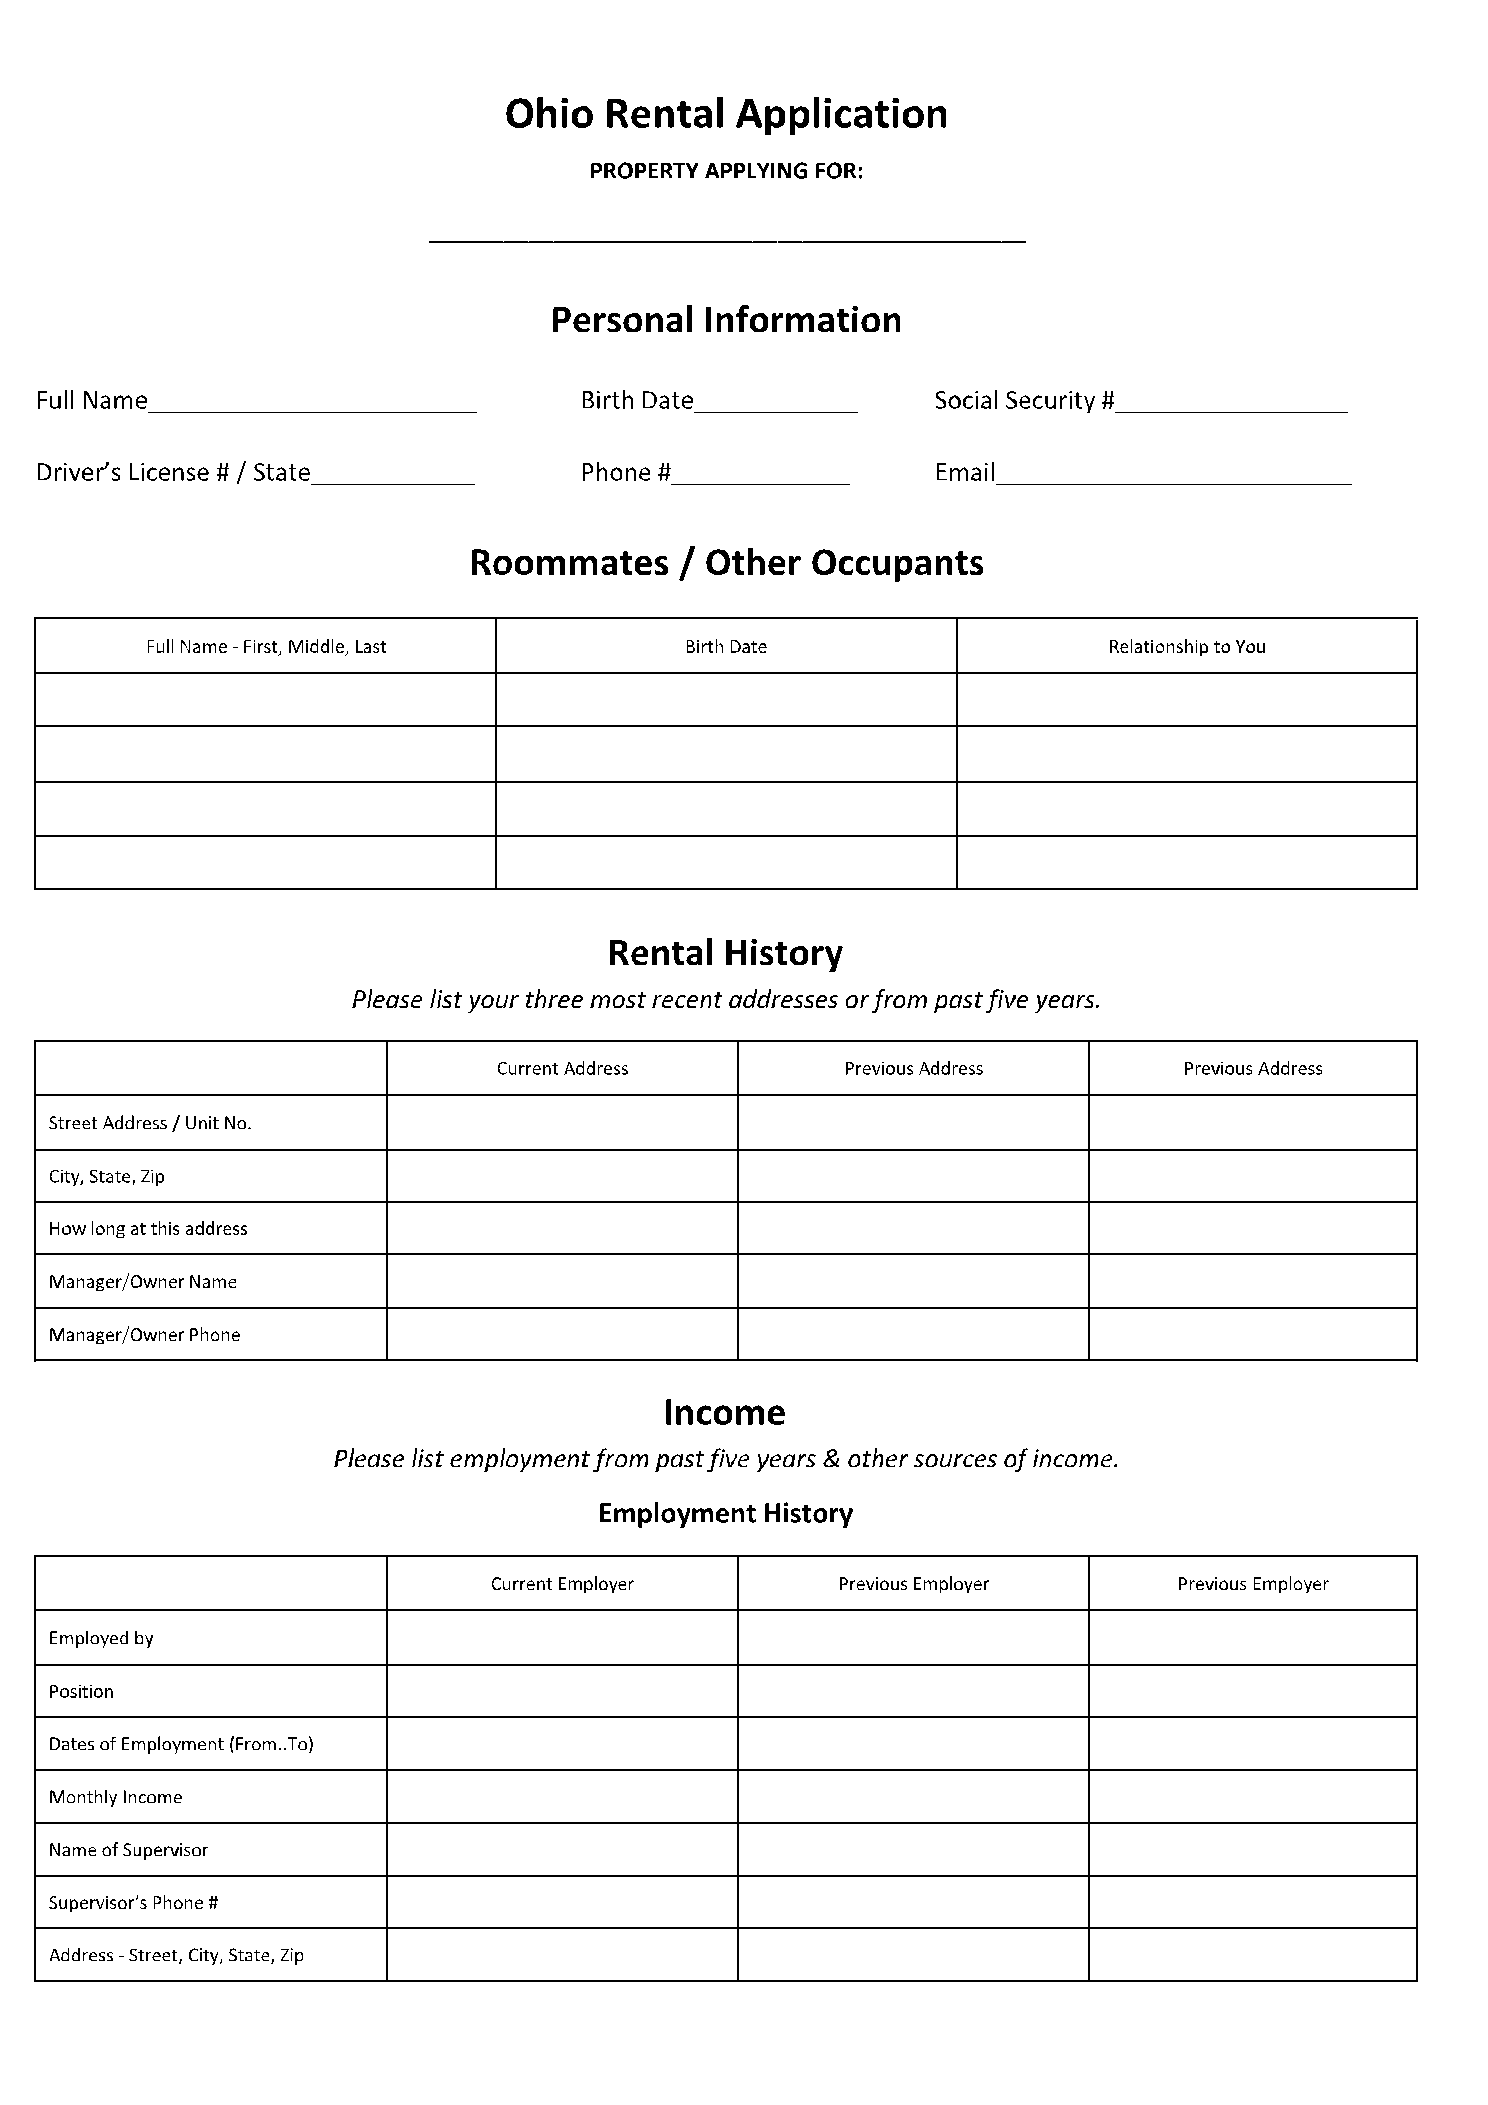 Ohio Rental Application